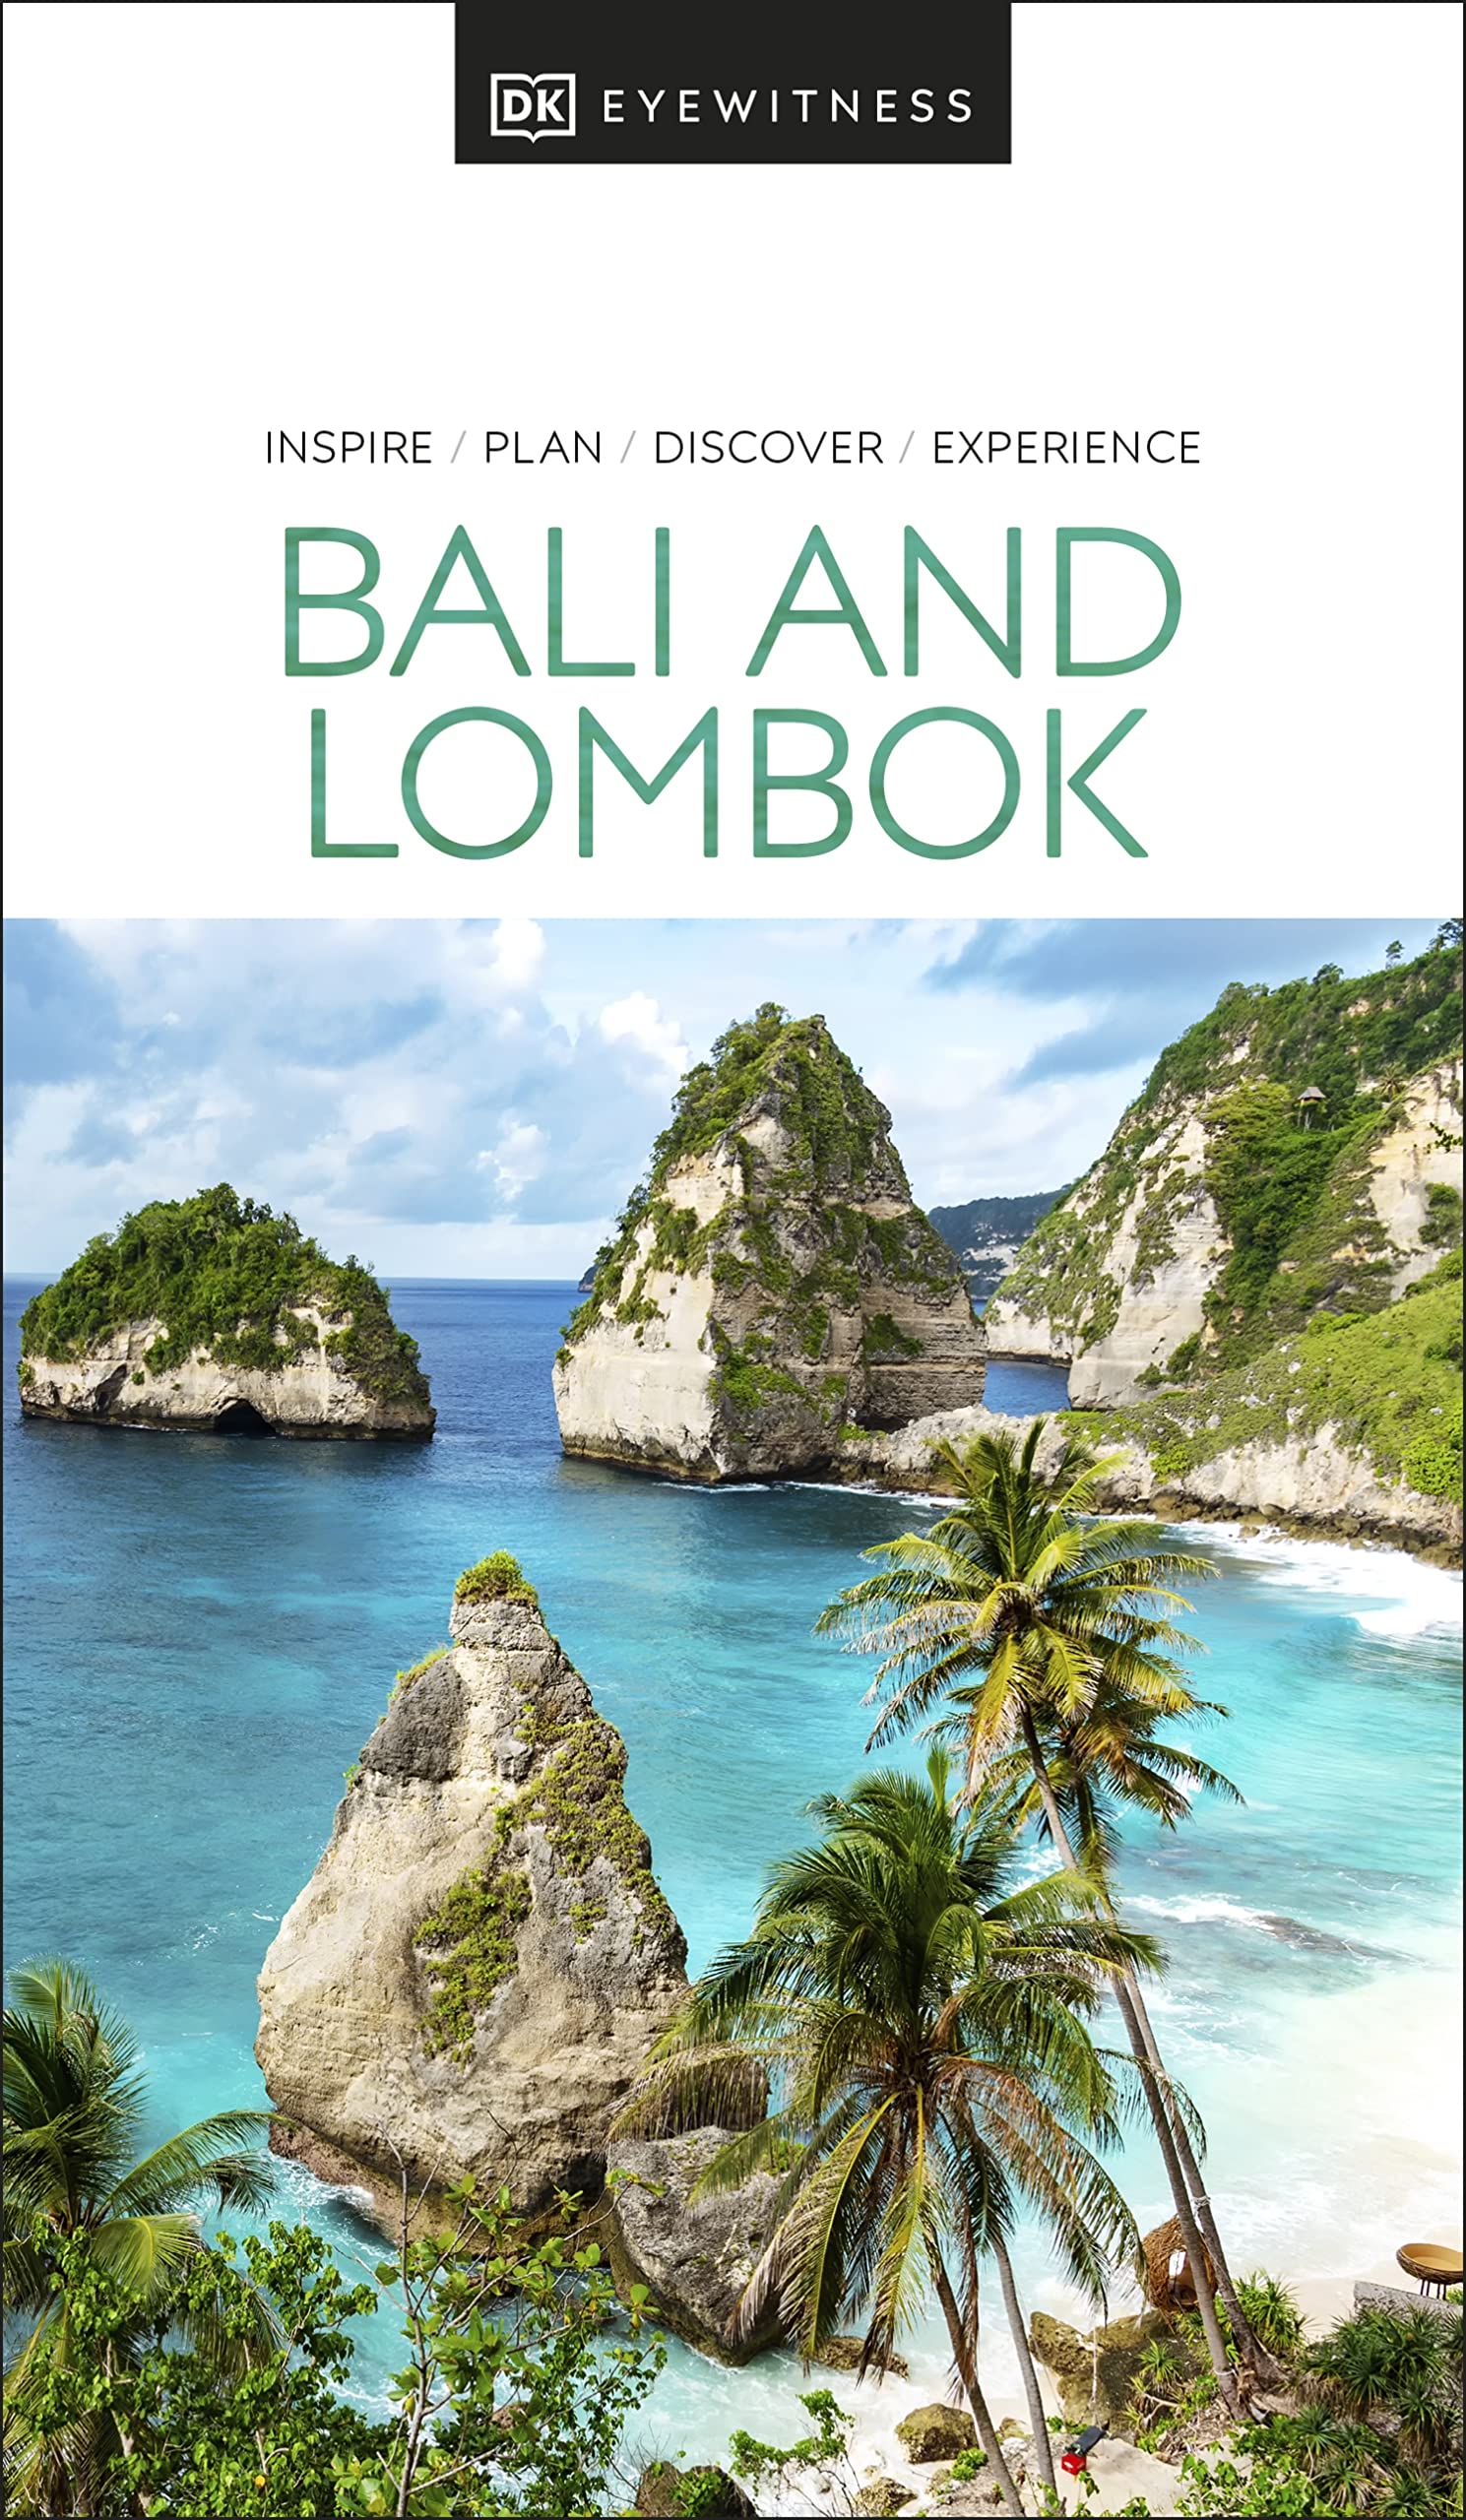 DK Eyewitness: Bali and Lombok